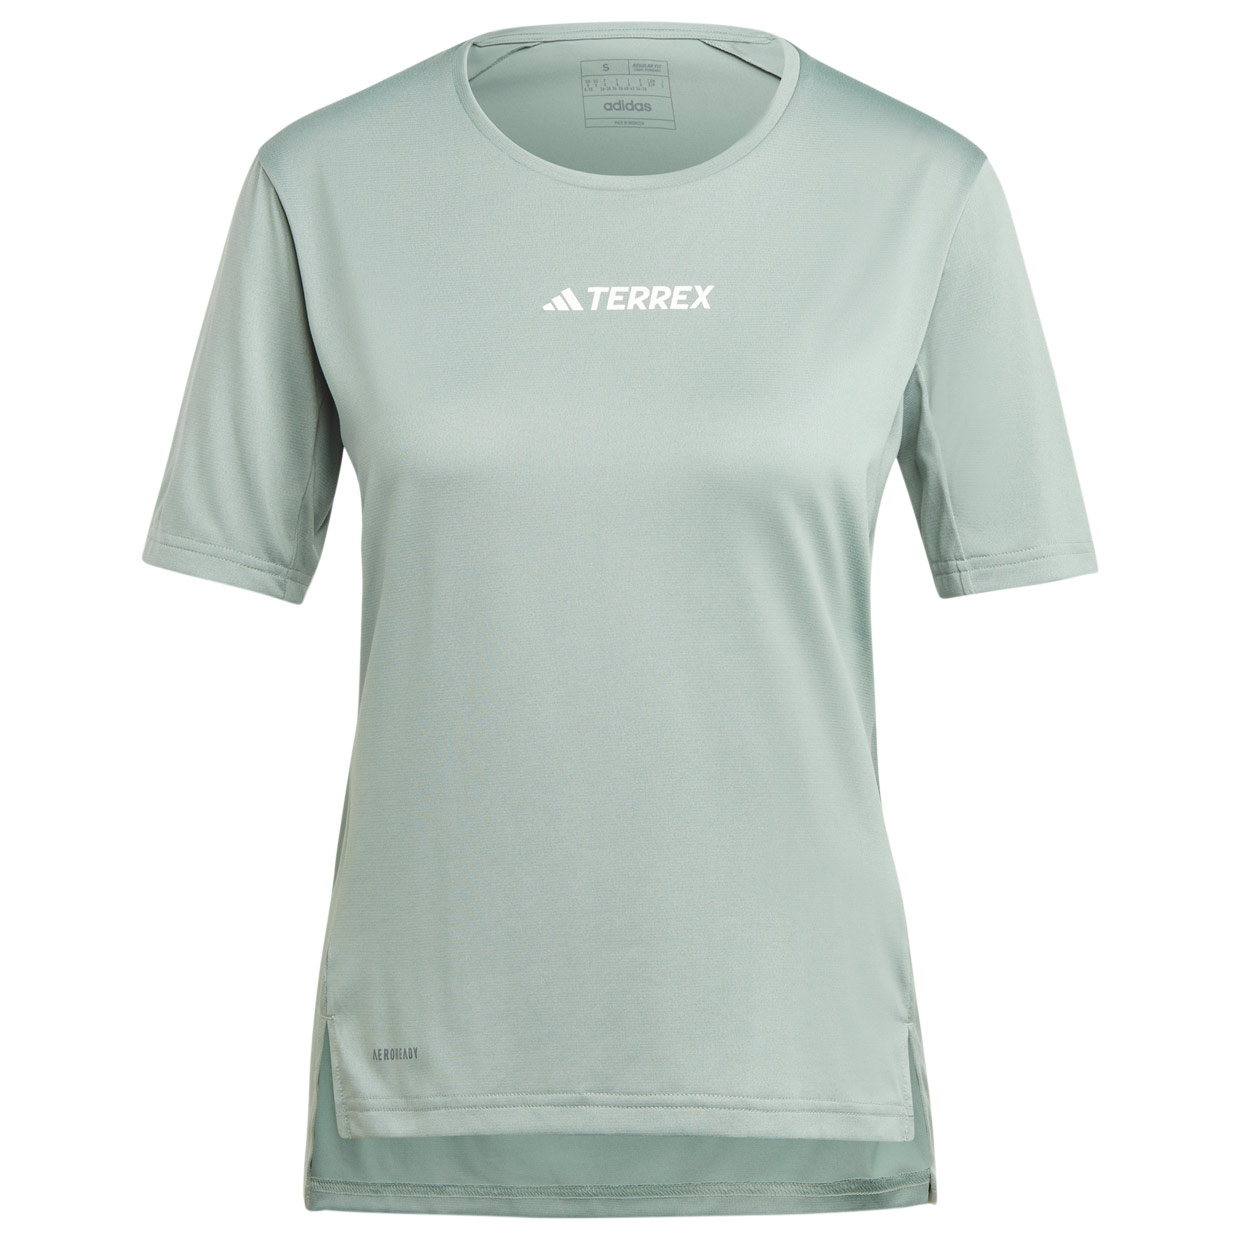 Damen T-Shirt TERREX Multi